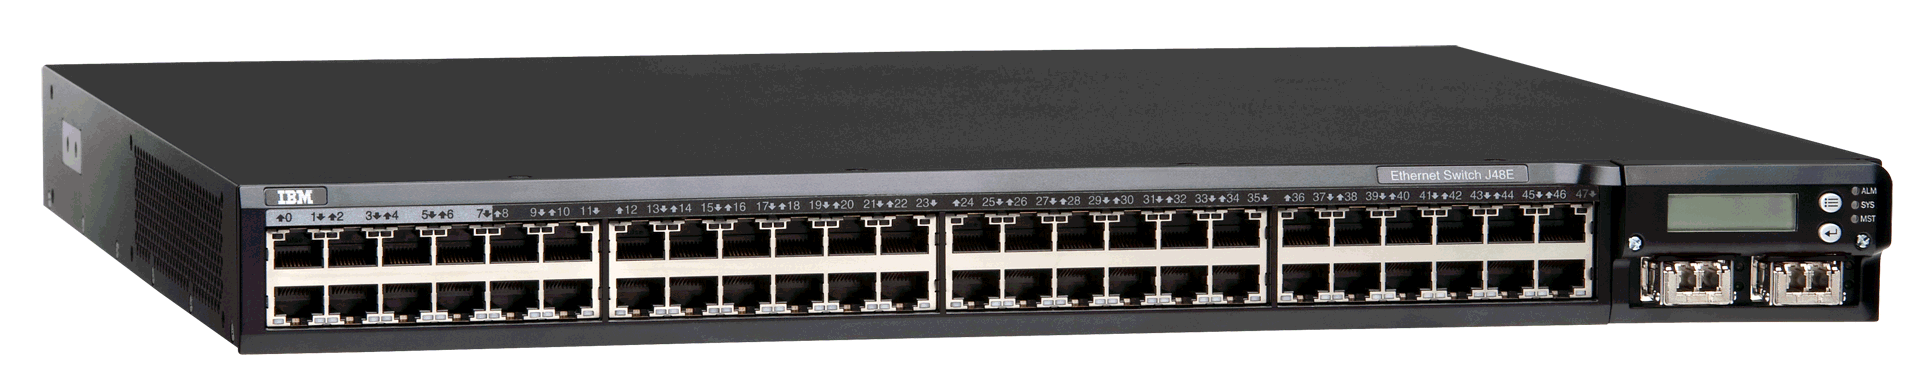 The IBM J48E Ethernet Switch